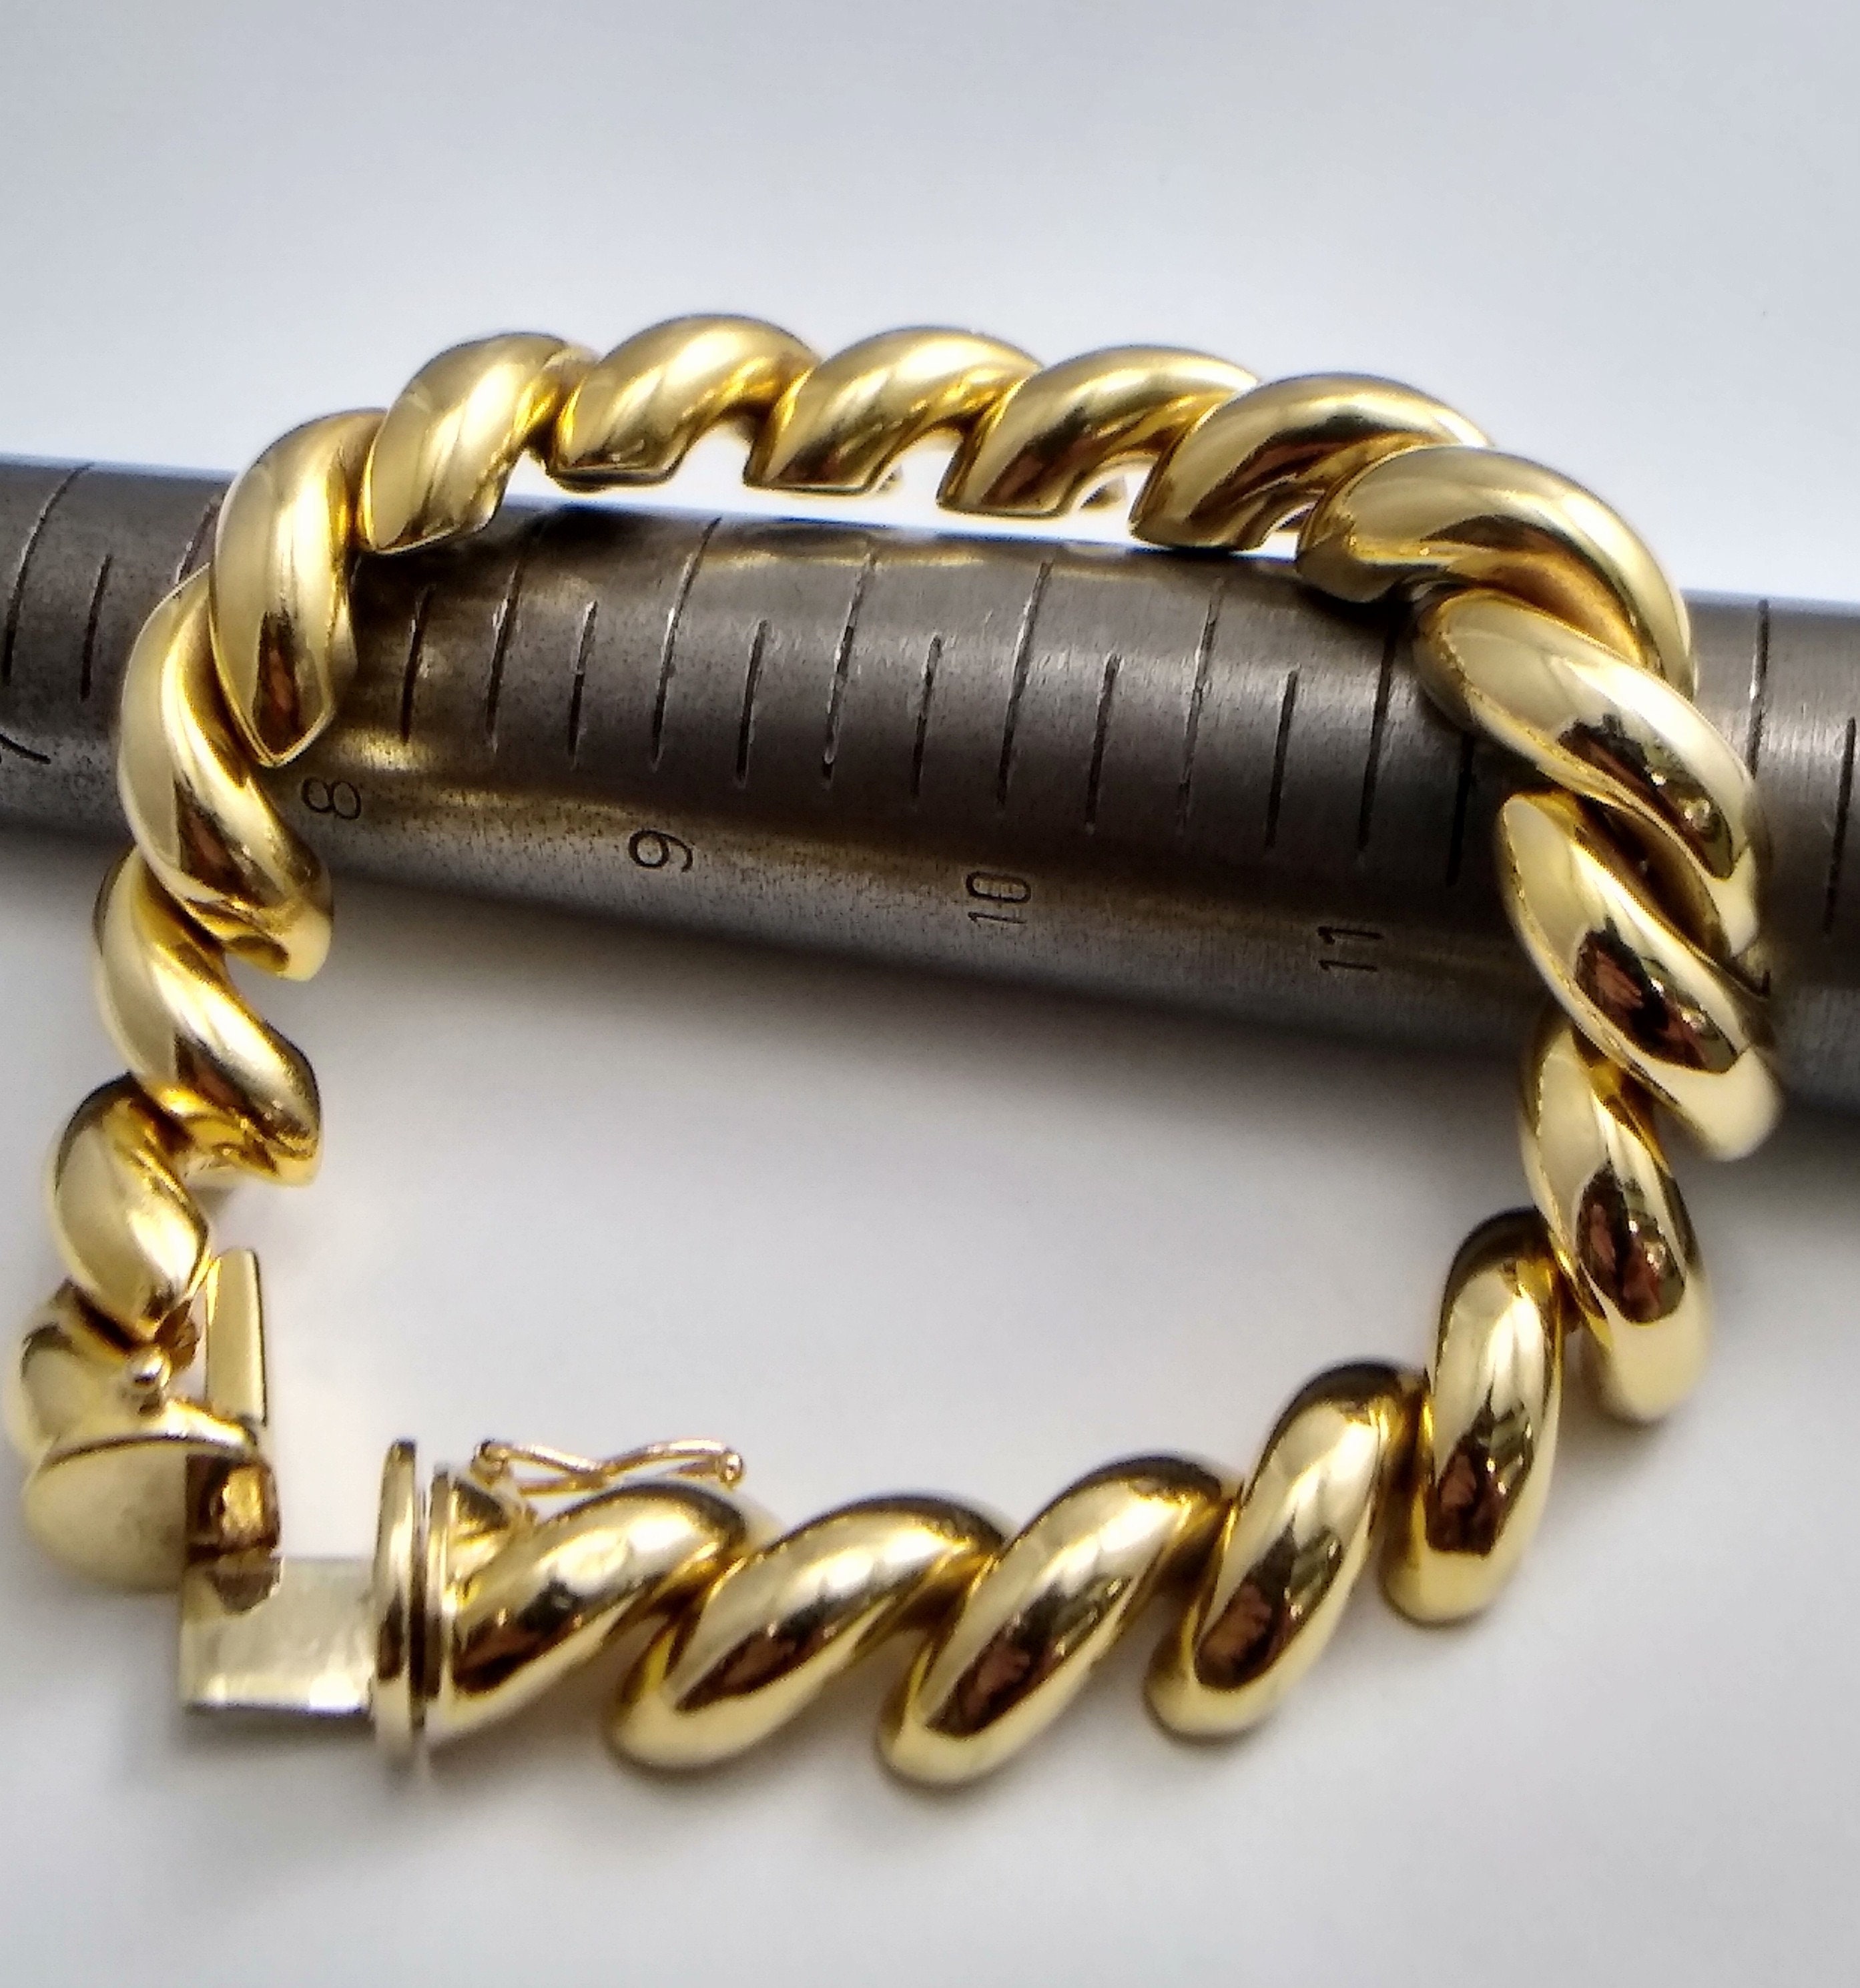 Vintage Charm Bracelet, 14K Yellow Gold, Boy and Girls Charms. 28.2 Grams